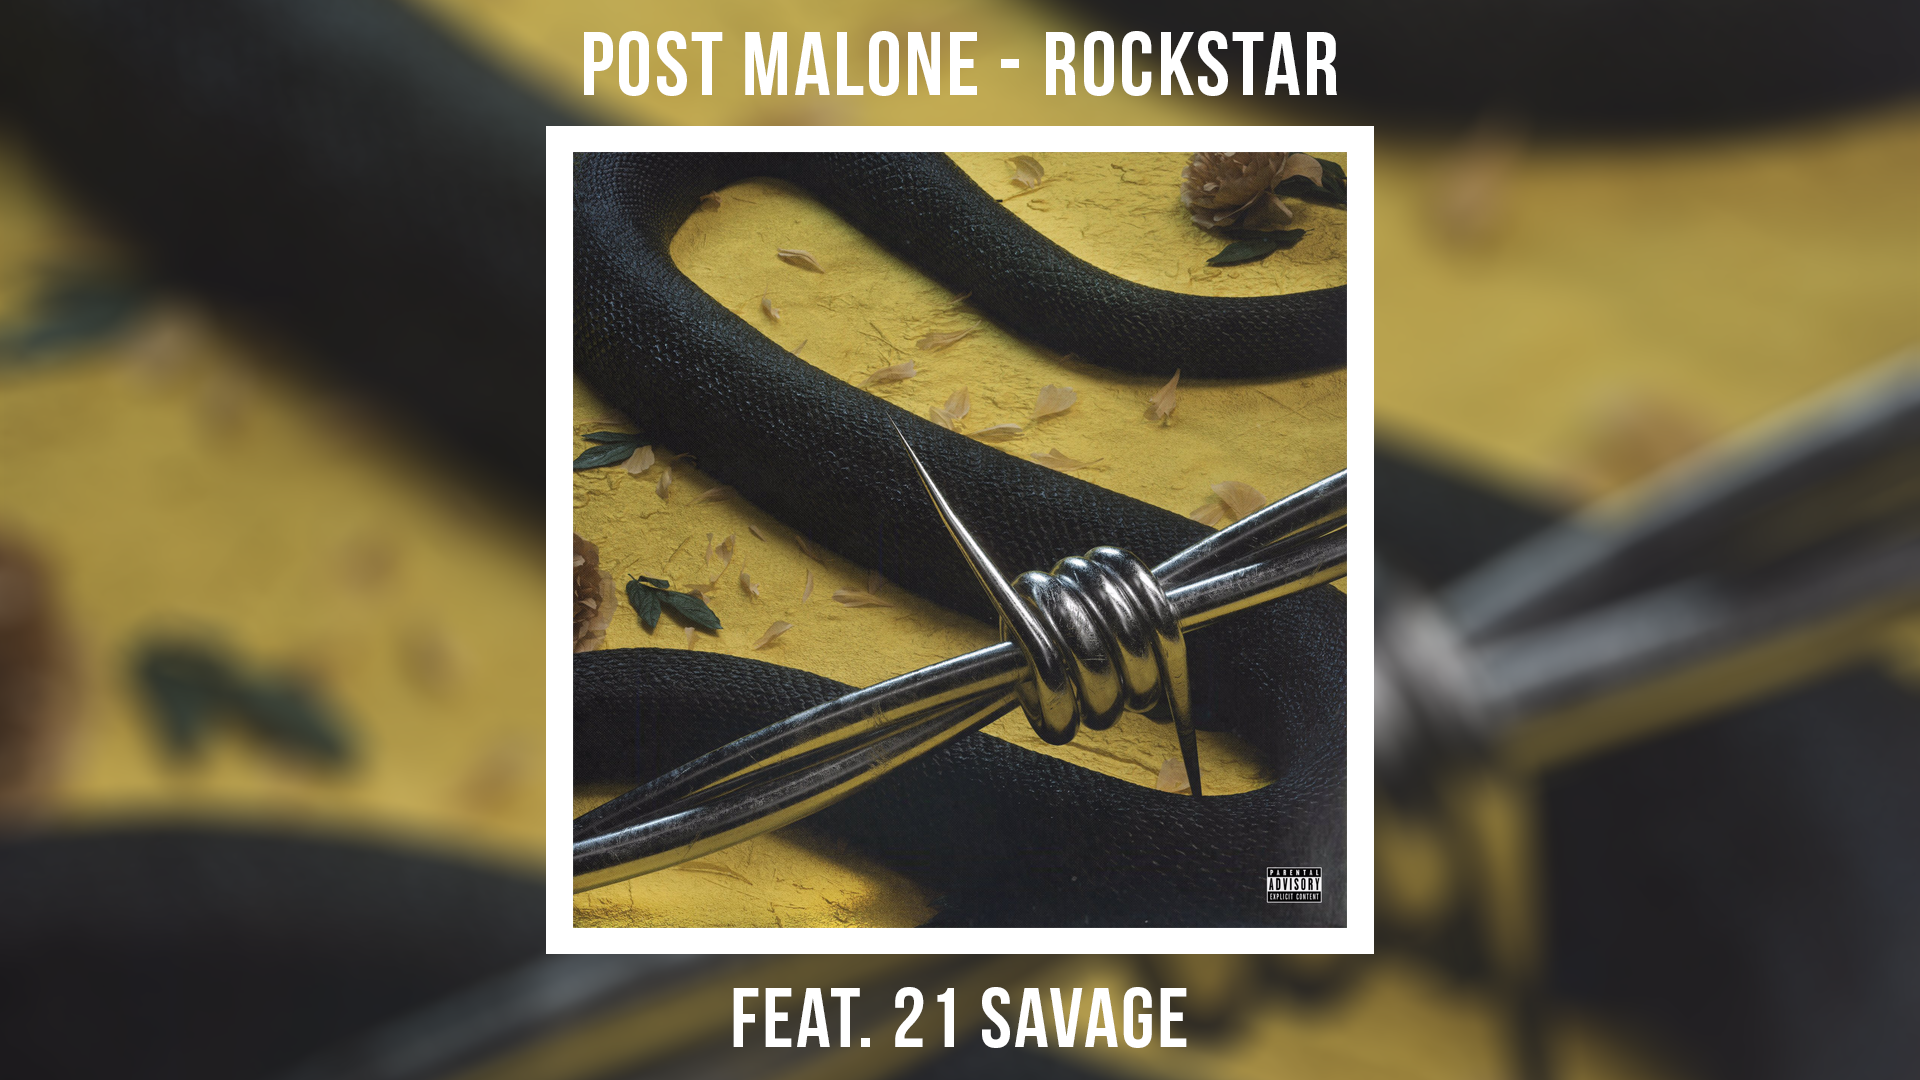 21 savage post. Post Malone 21 Savage Rockstar. Post Malone Rockstar обложка. Rockstar Post Malone 21 Savage обложка. Post Malone Rockstar ft. 21 Savage обложка.